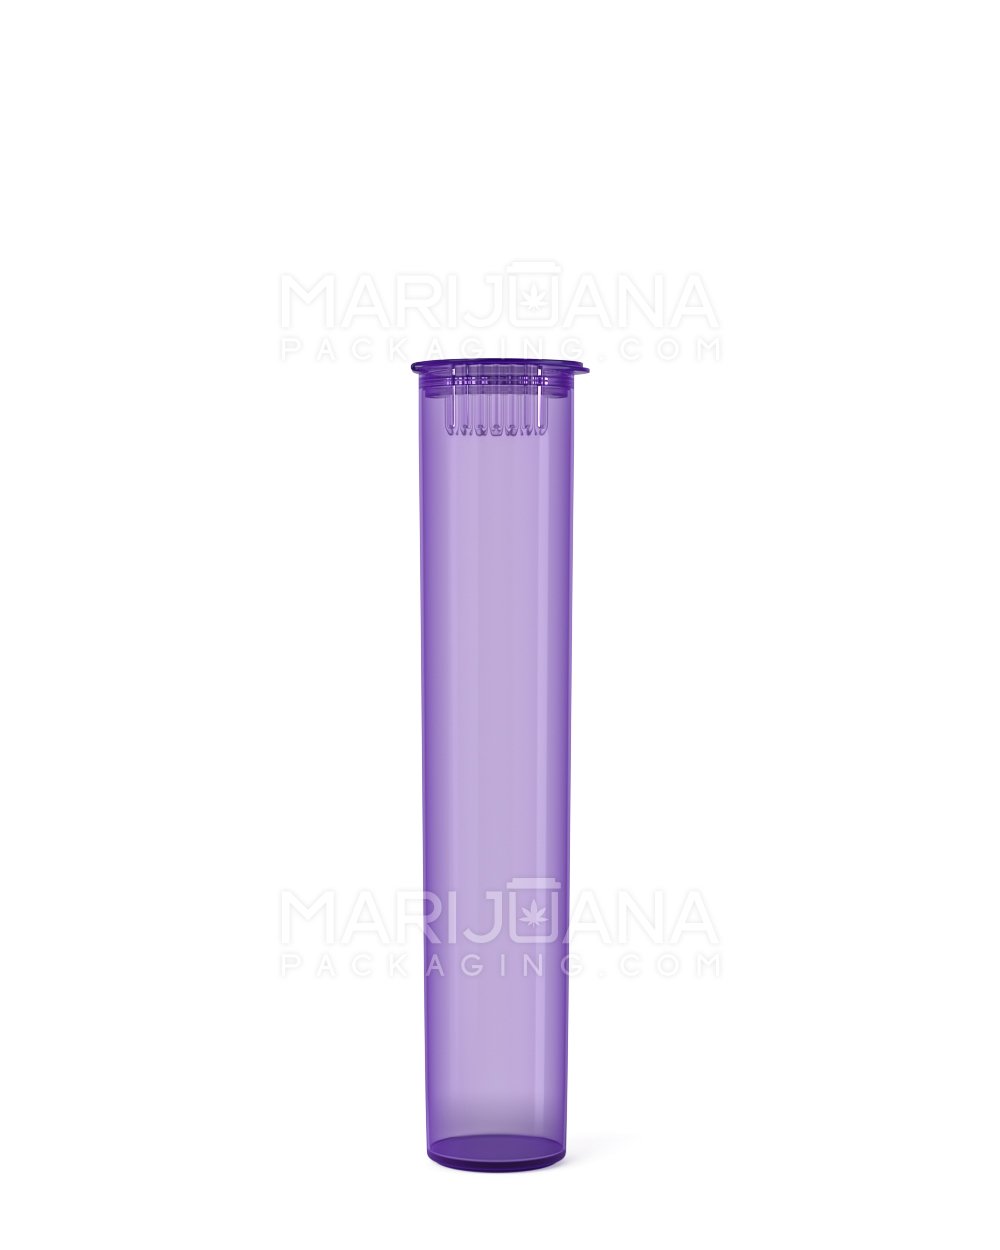 Child Resistant | Pop Top Translucent Plastic Pre-Roll Tubes | 95mm - Purple - 1000 Count - 2